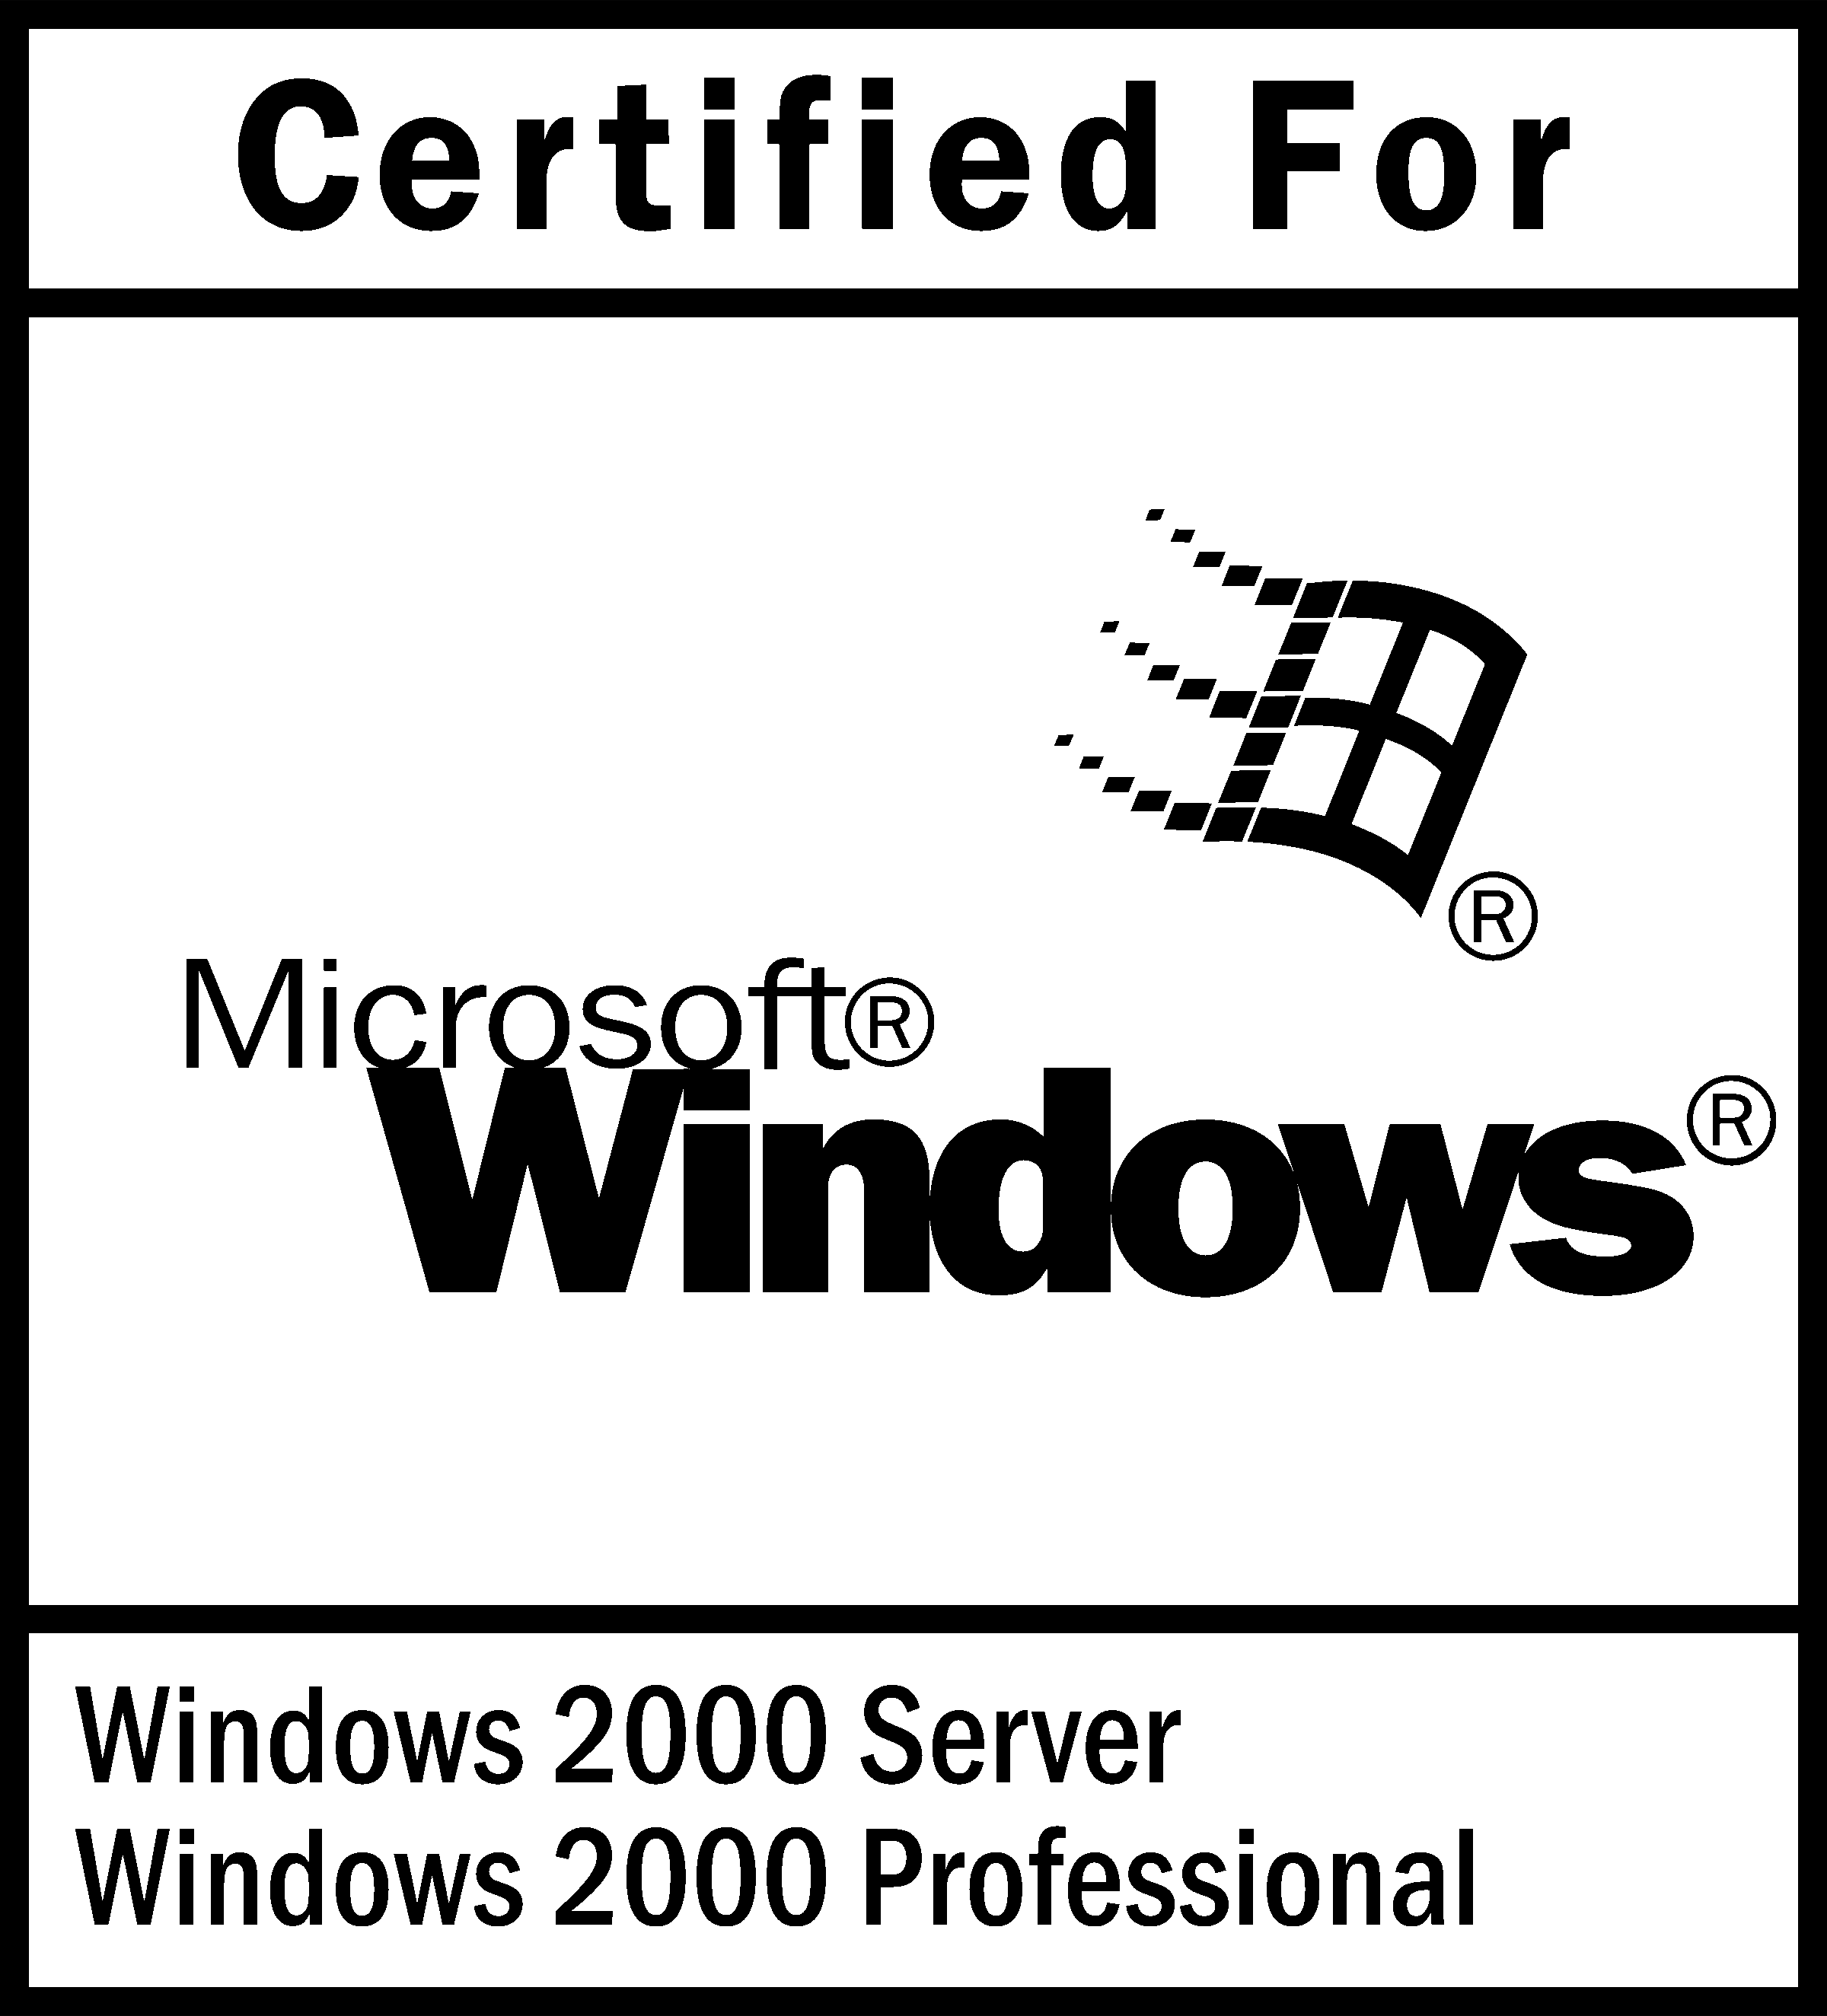 Windows 2000 Professional Logo - Microsoft Windows 2000 Logo PNG Transparent & SVG Vector - Freebie ...